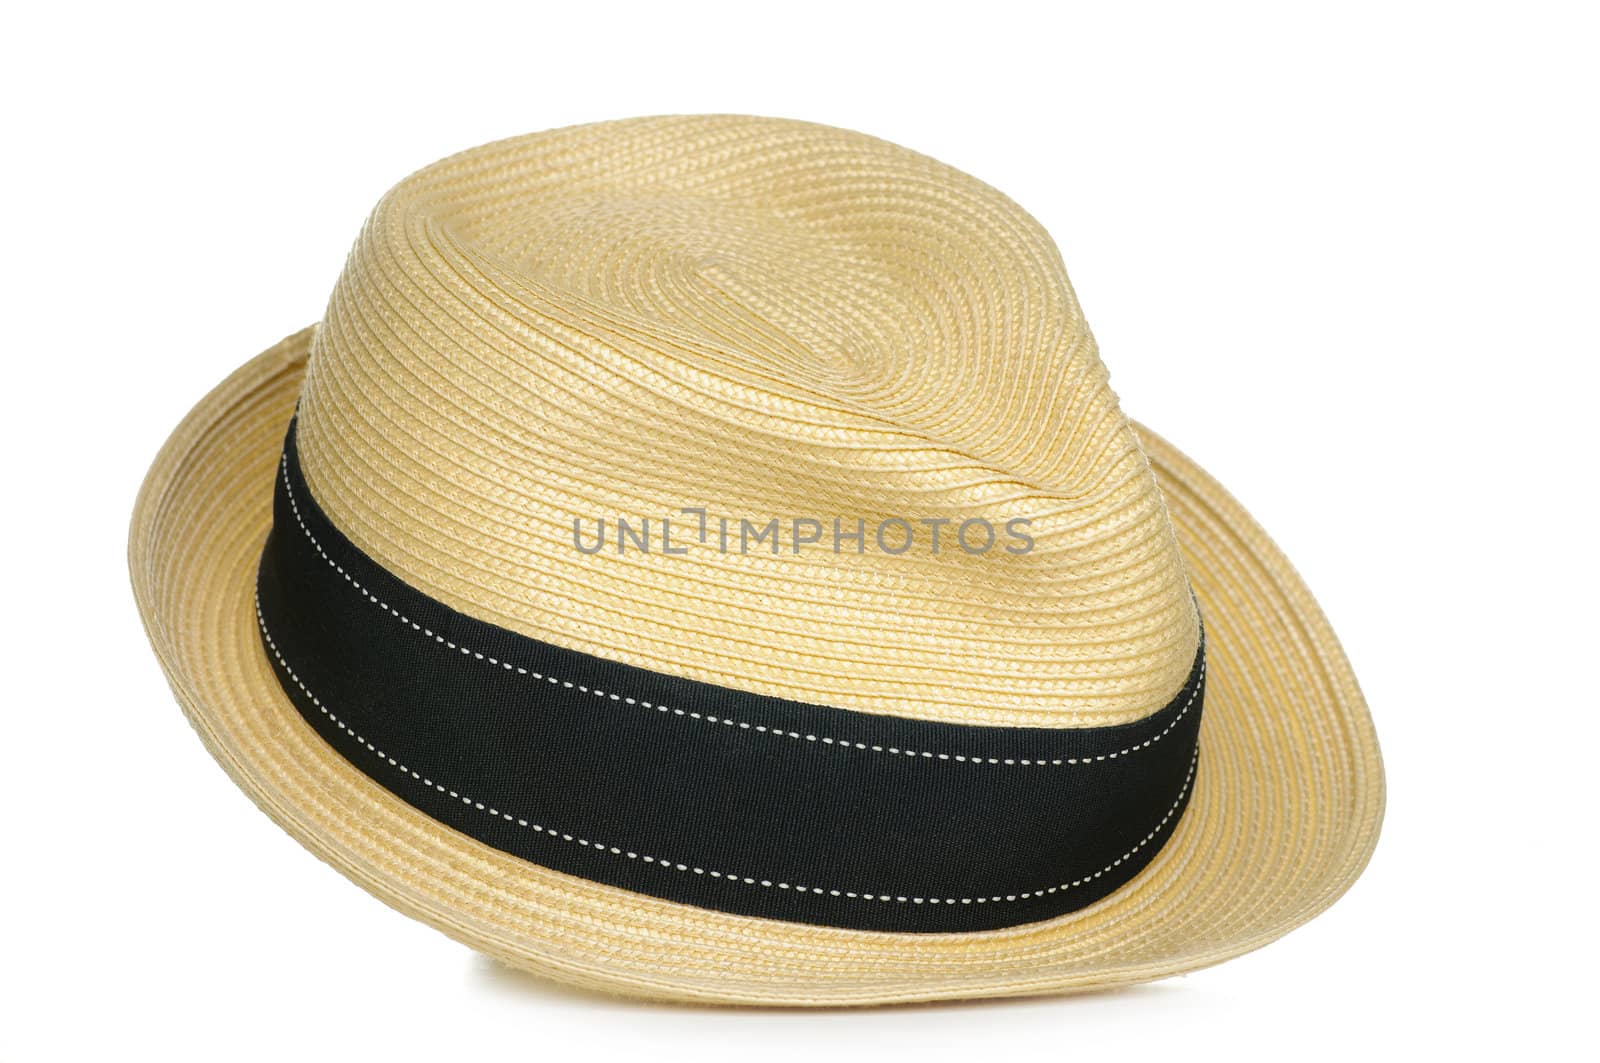 A tan straw fedora hat with a black stripe.